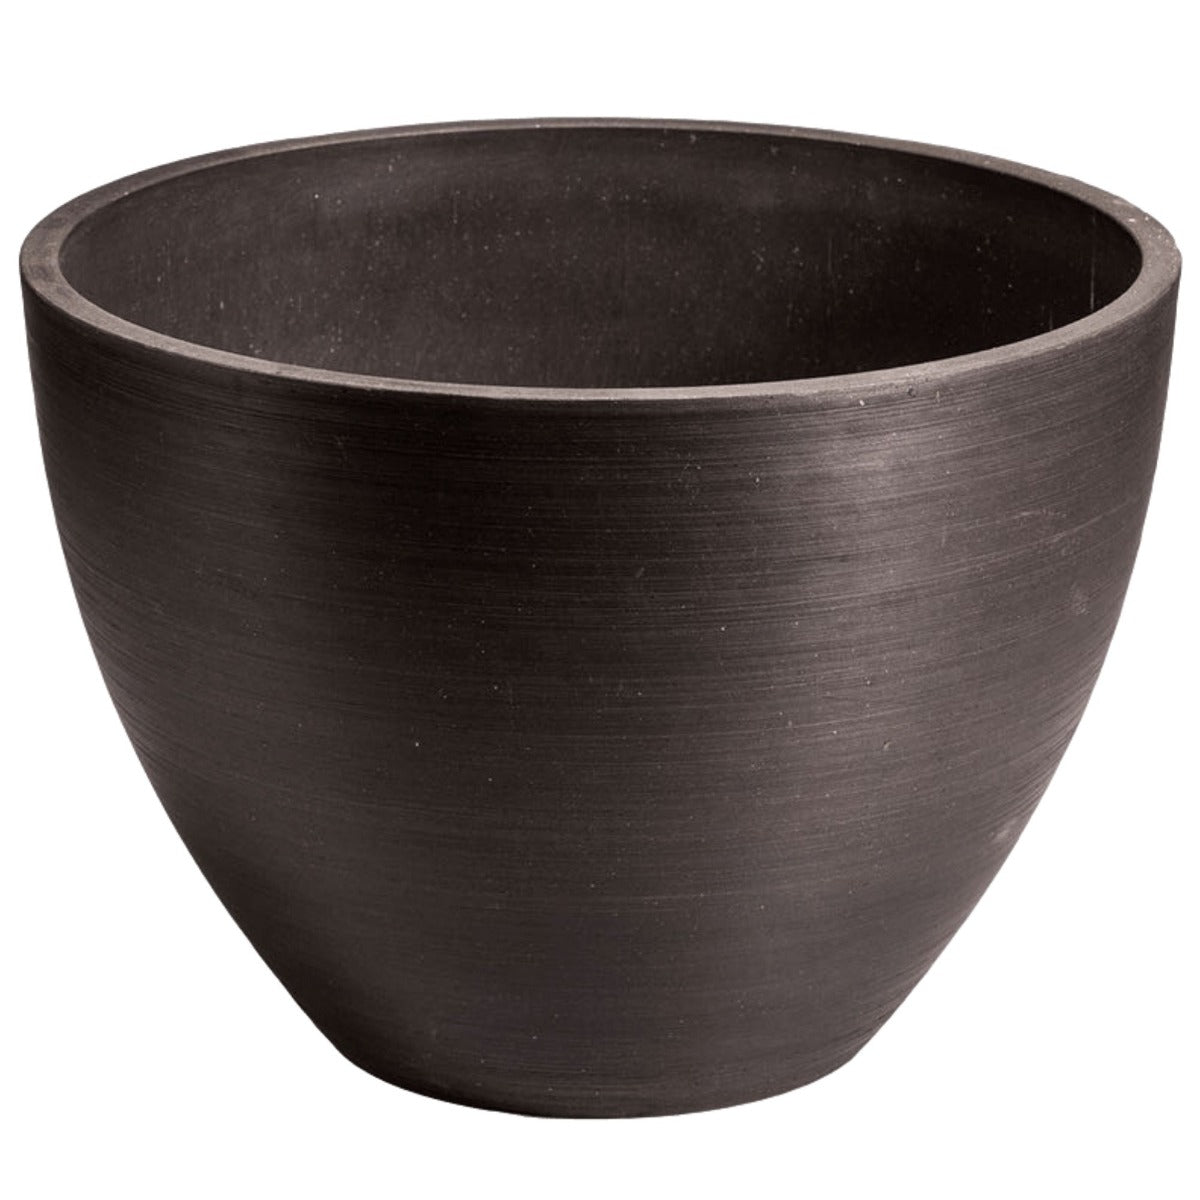 Polished Black Planter Bowl 30cm - BM House & Garden